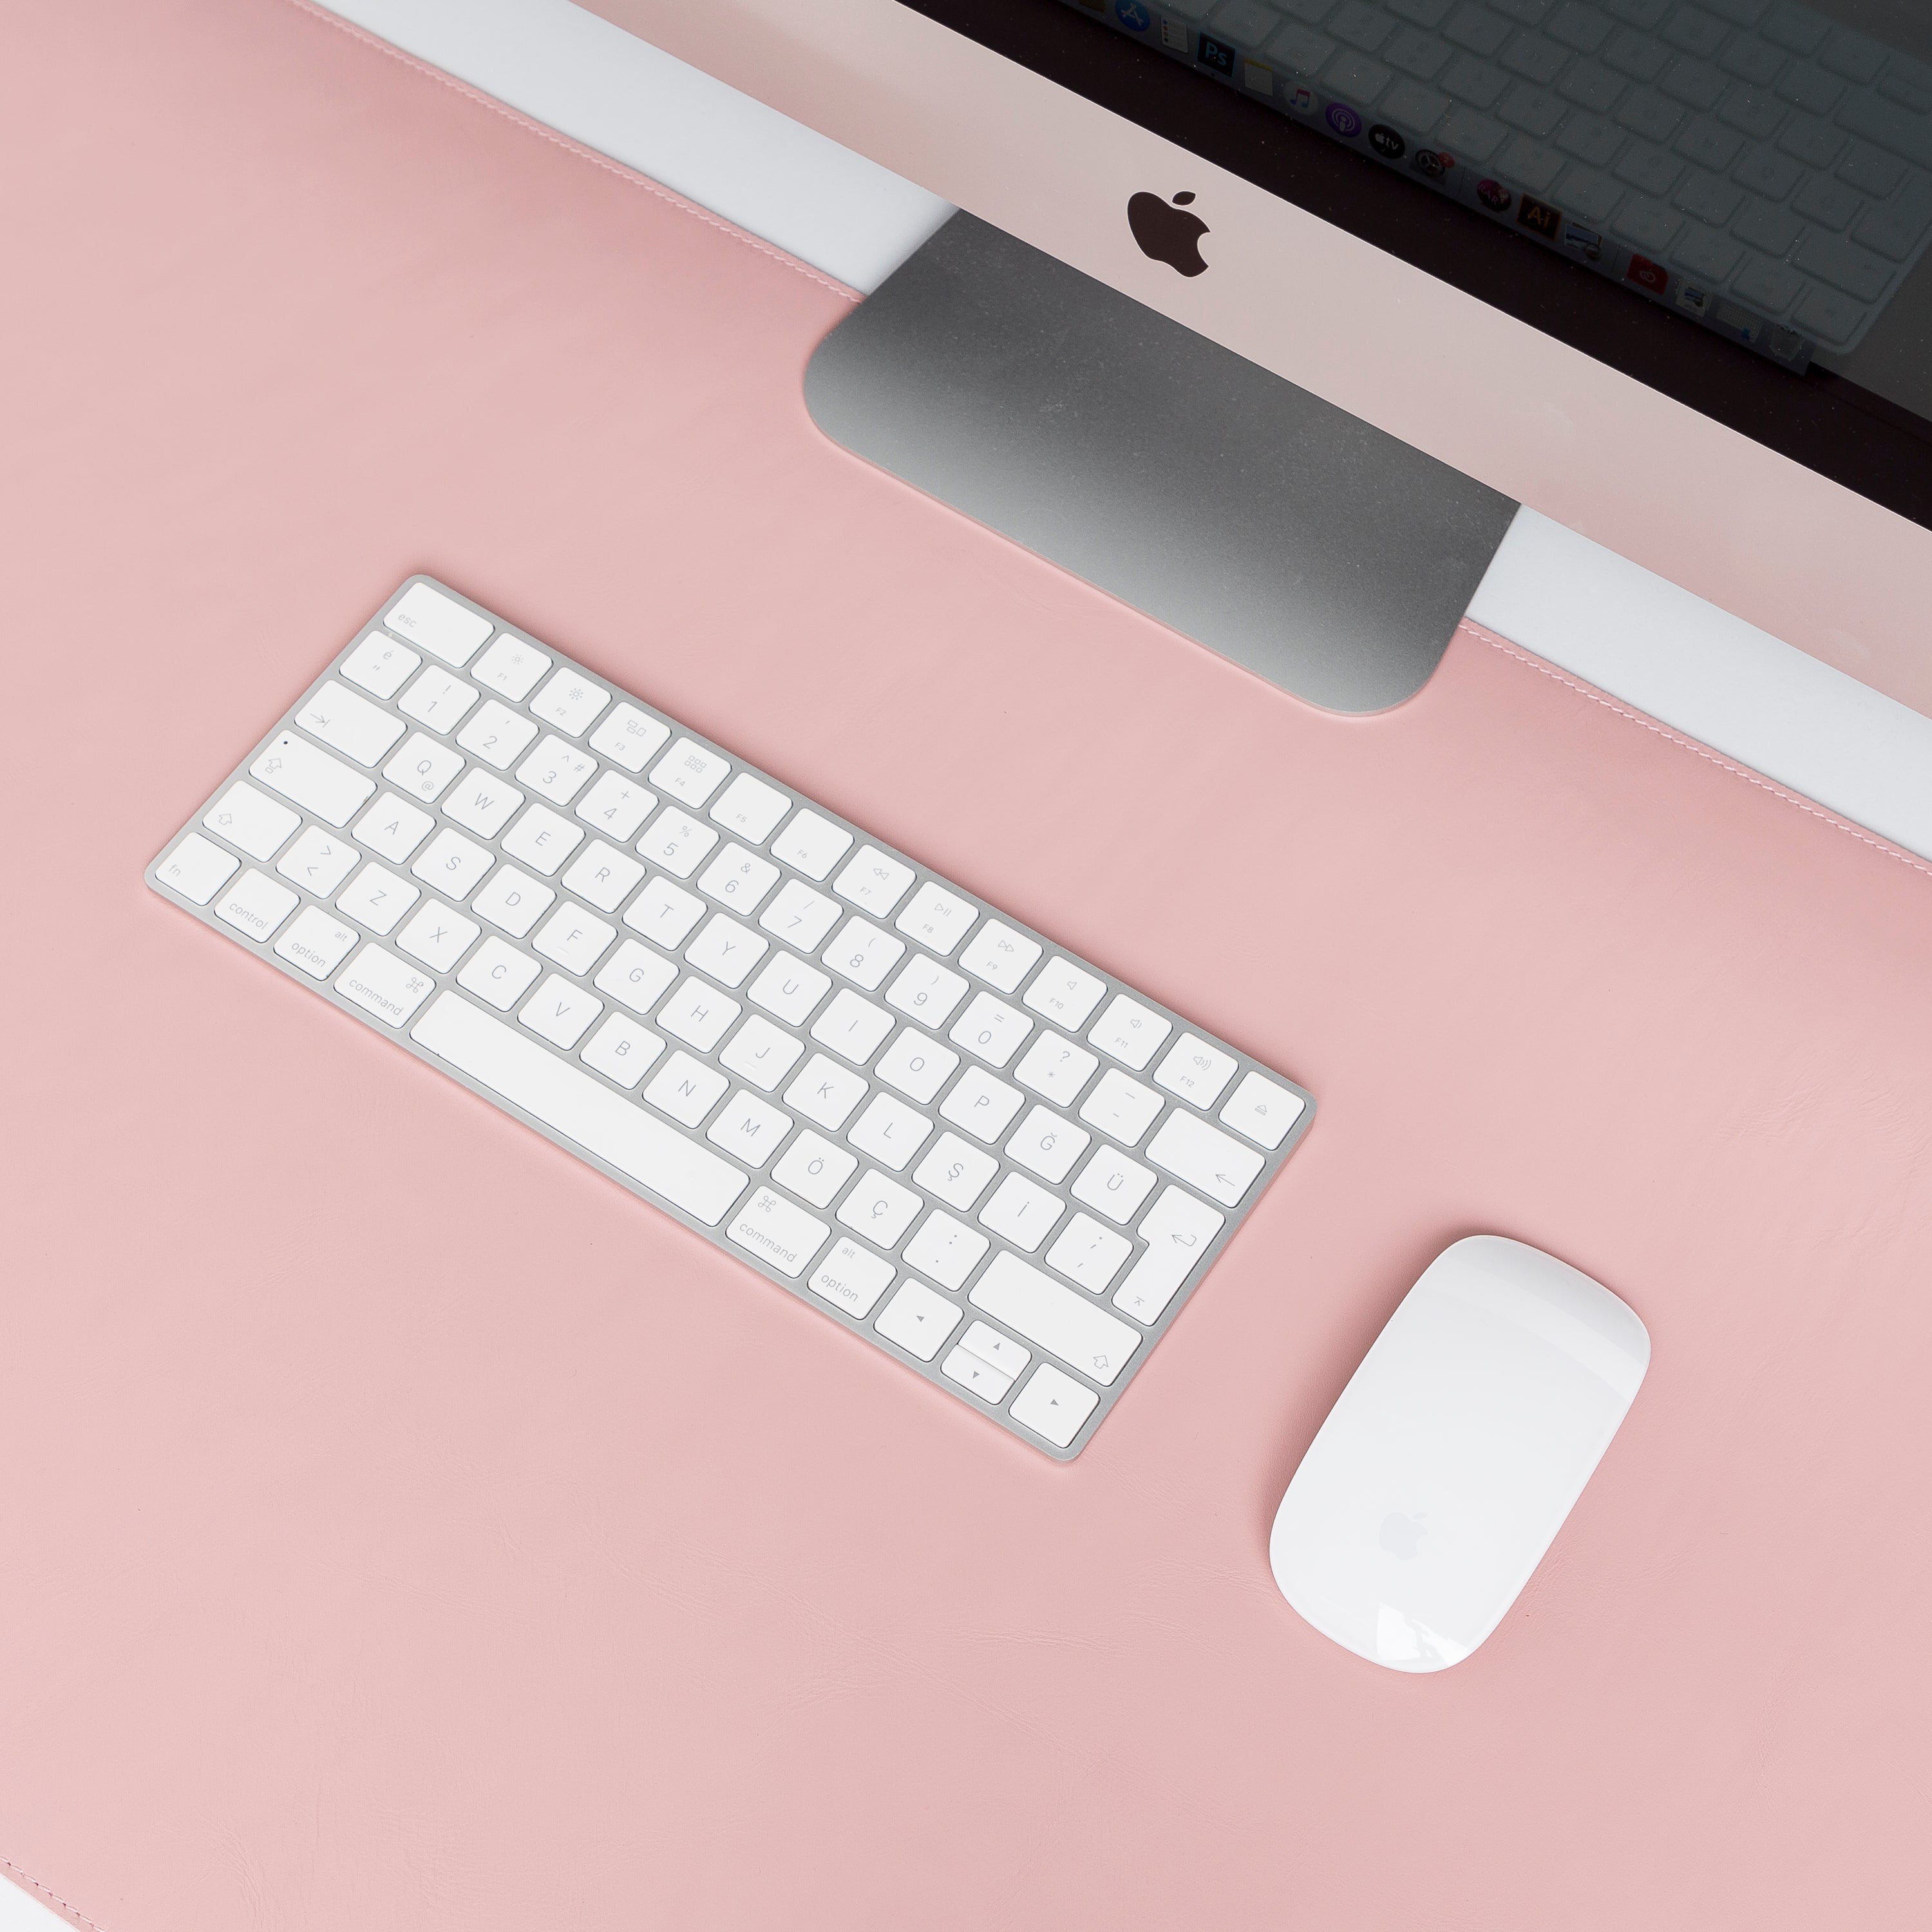 DelfiCase Genuine Leather Deskmat, Computer Pad, Office Desk Pad (Pink Nude) 1